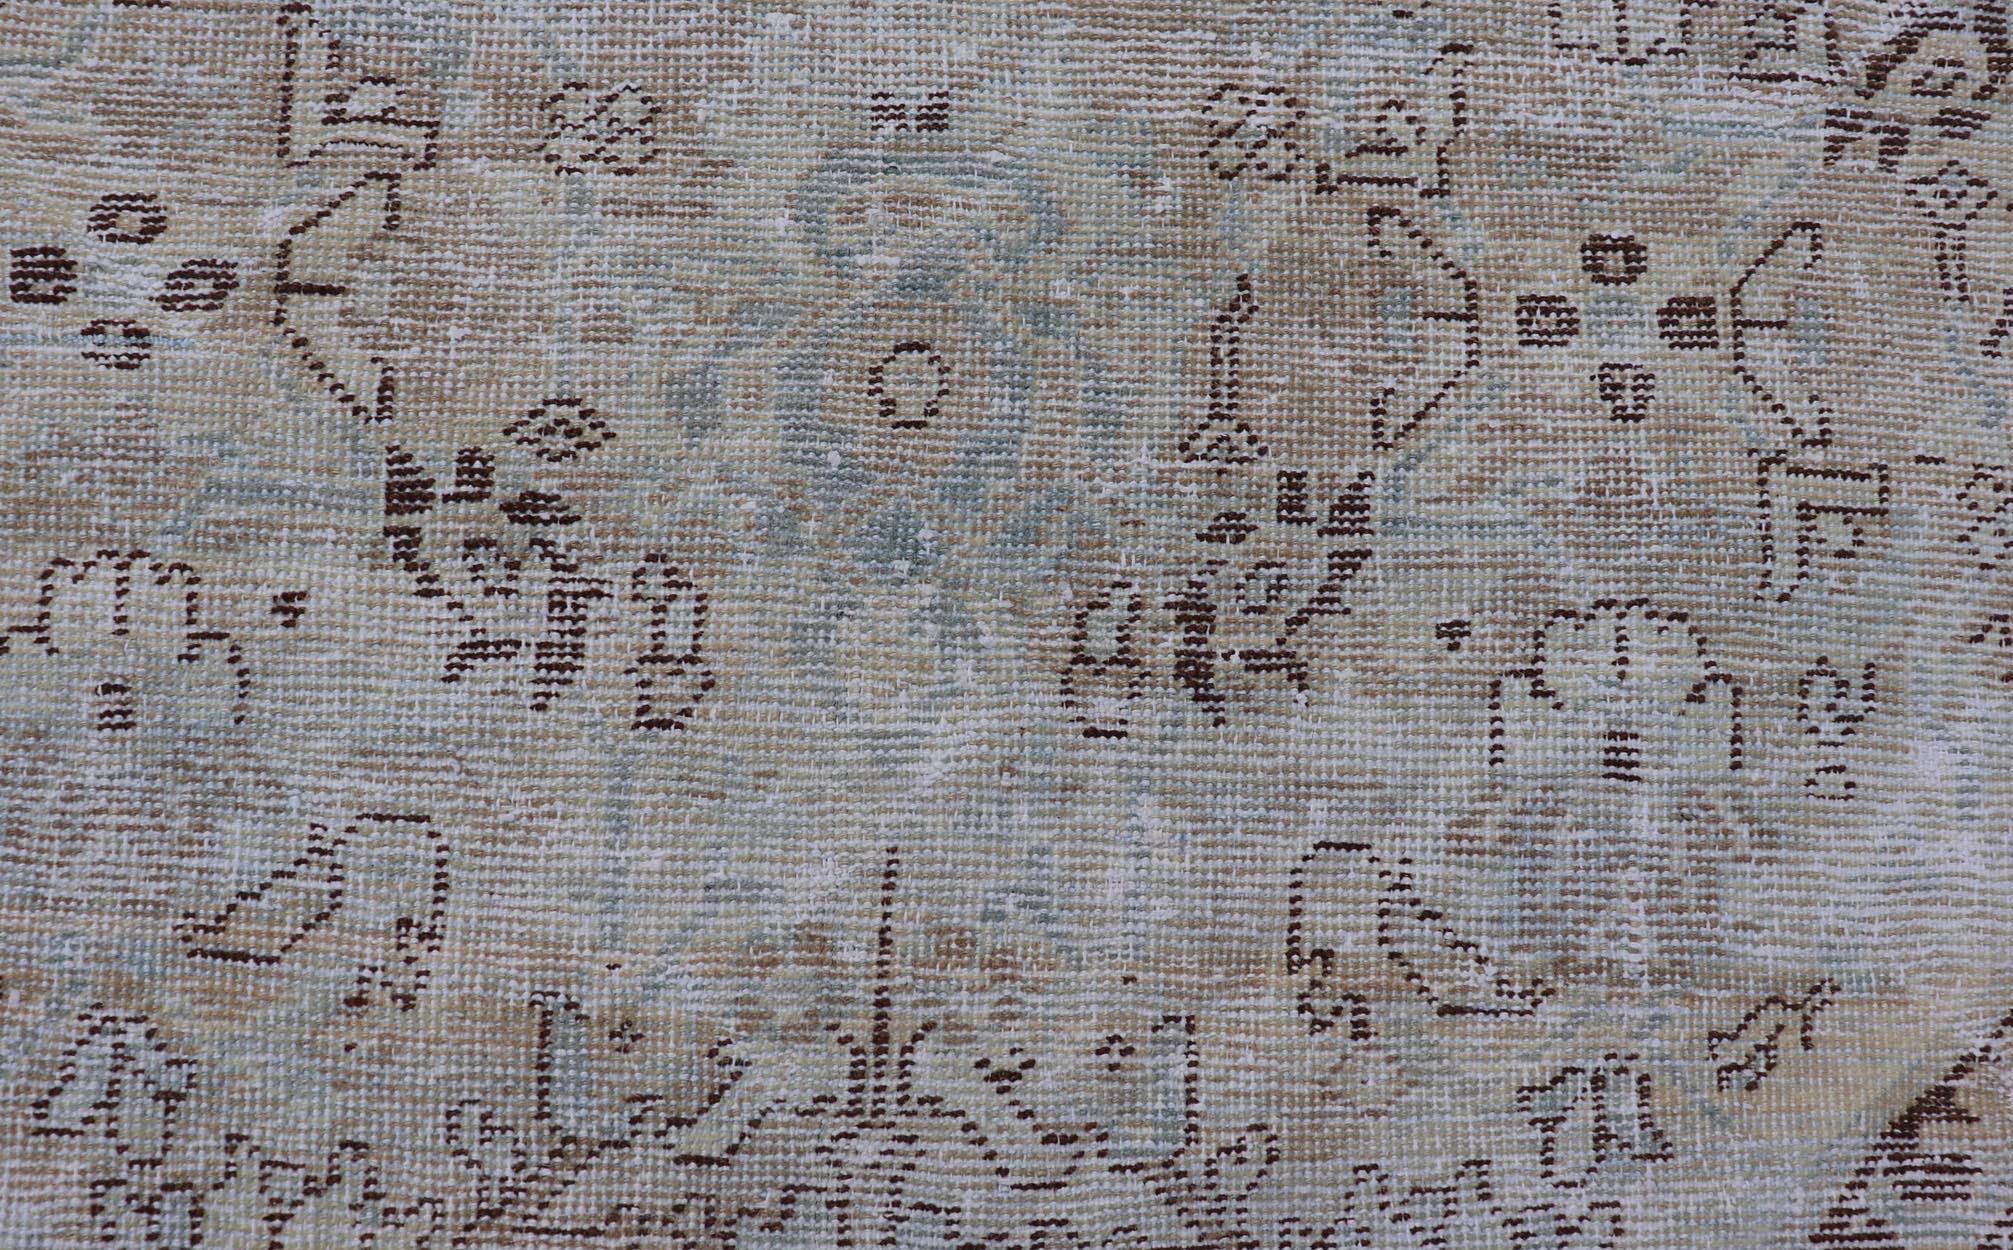 Vintage Persian Mahal rug with Sub-Geometric Design with Small Medallion 
Keivan Woven Arts / Country of origin: Iran; Type: Mahal; Design: Diamond Medallion, Floral Medallion; Keivan Woven Arts: Rug H-701-03. 
Measures: 7'0 x 9'11
This vintage